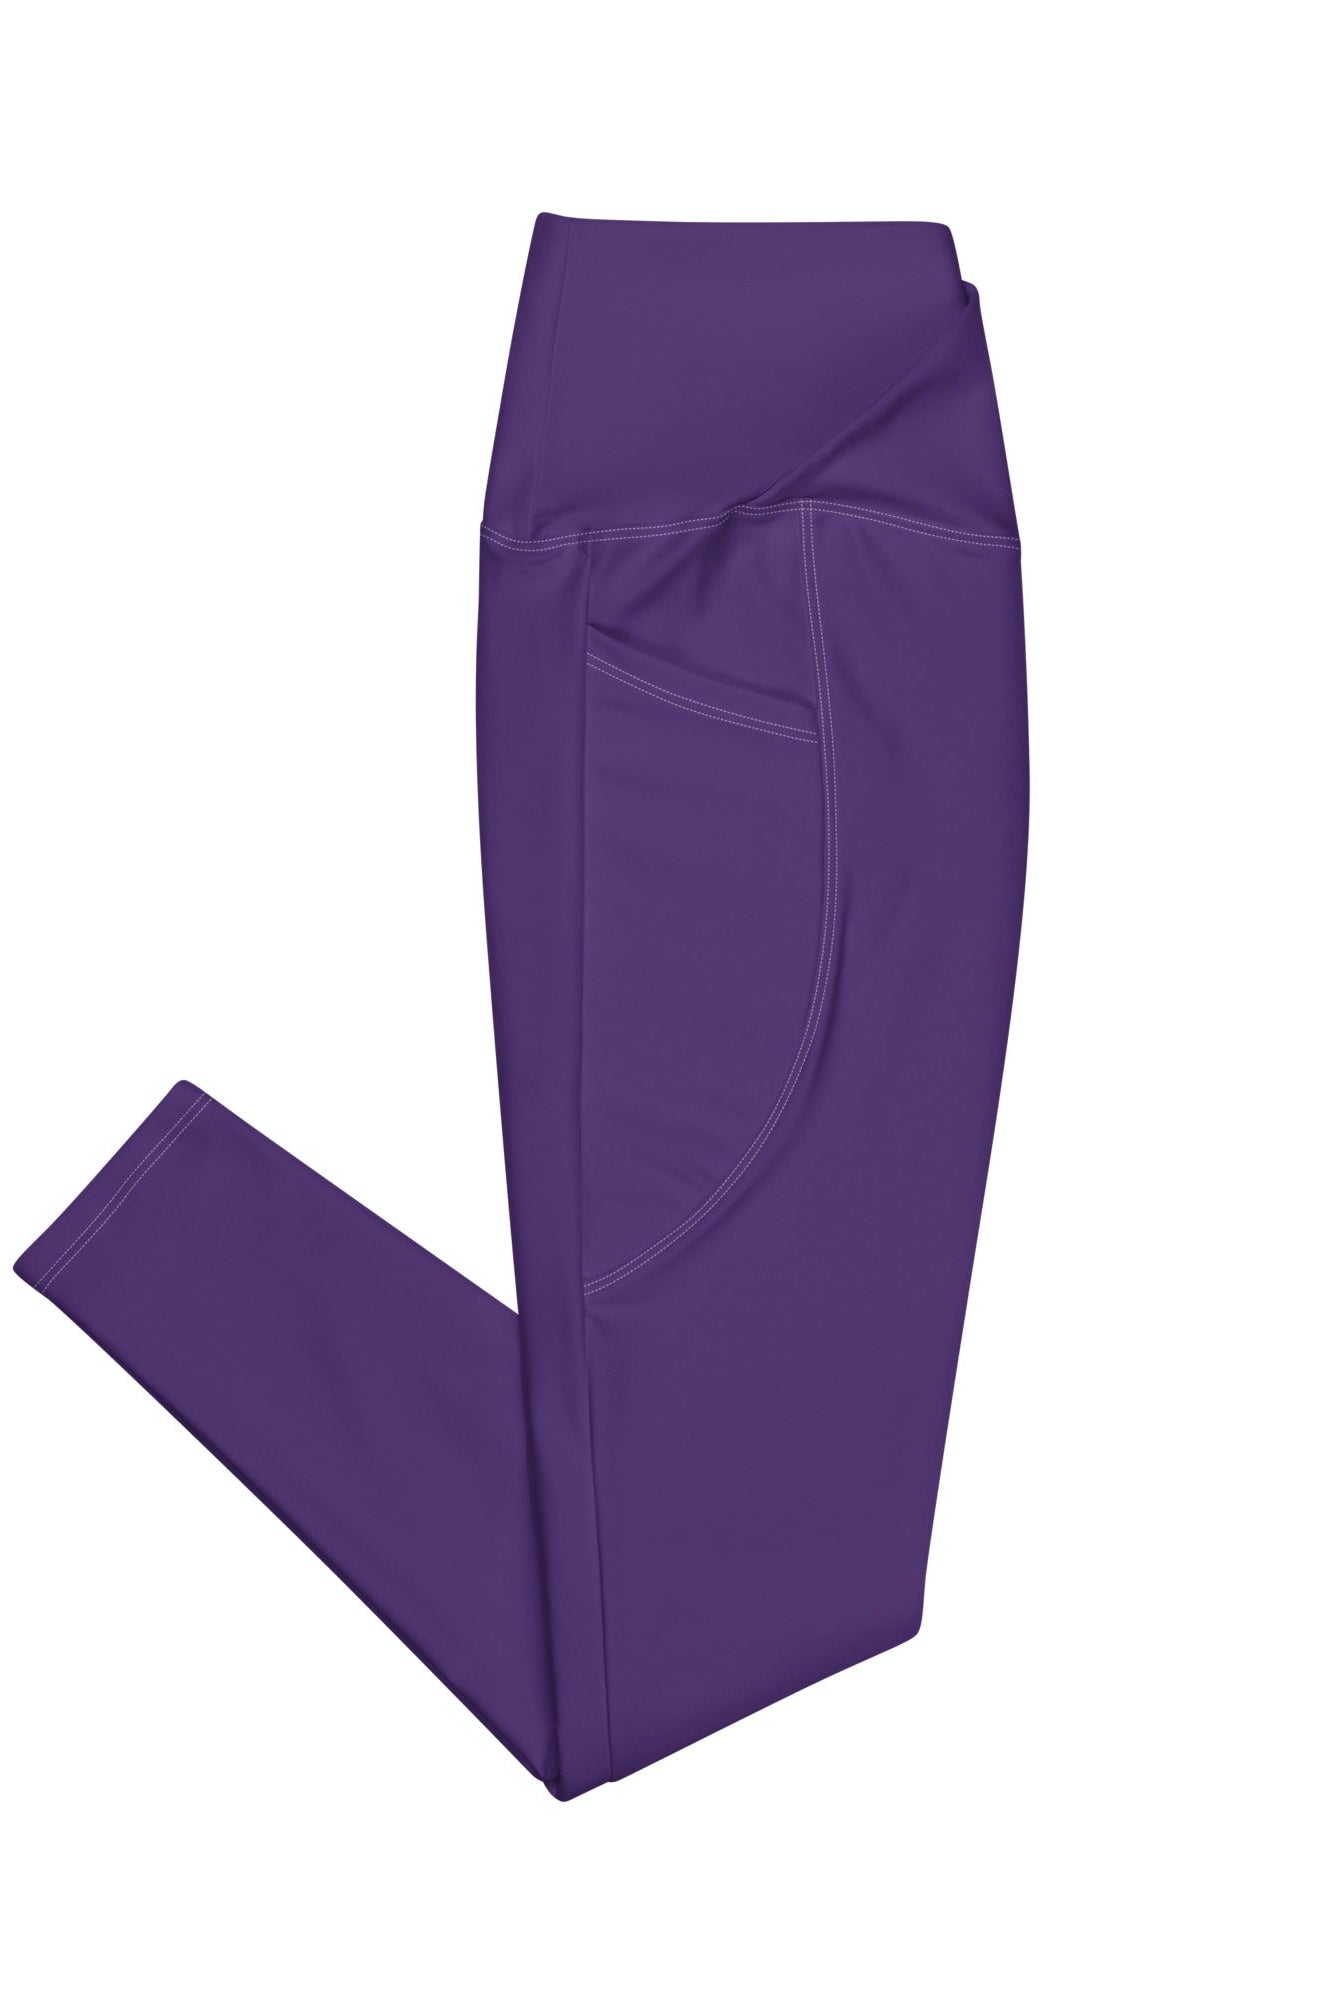 Bellybunny-Women's Crossover Leggings-Purple with White Logo